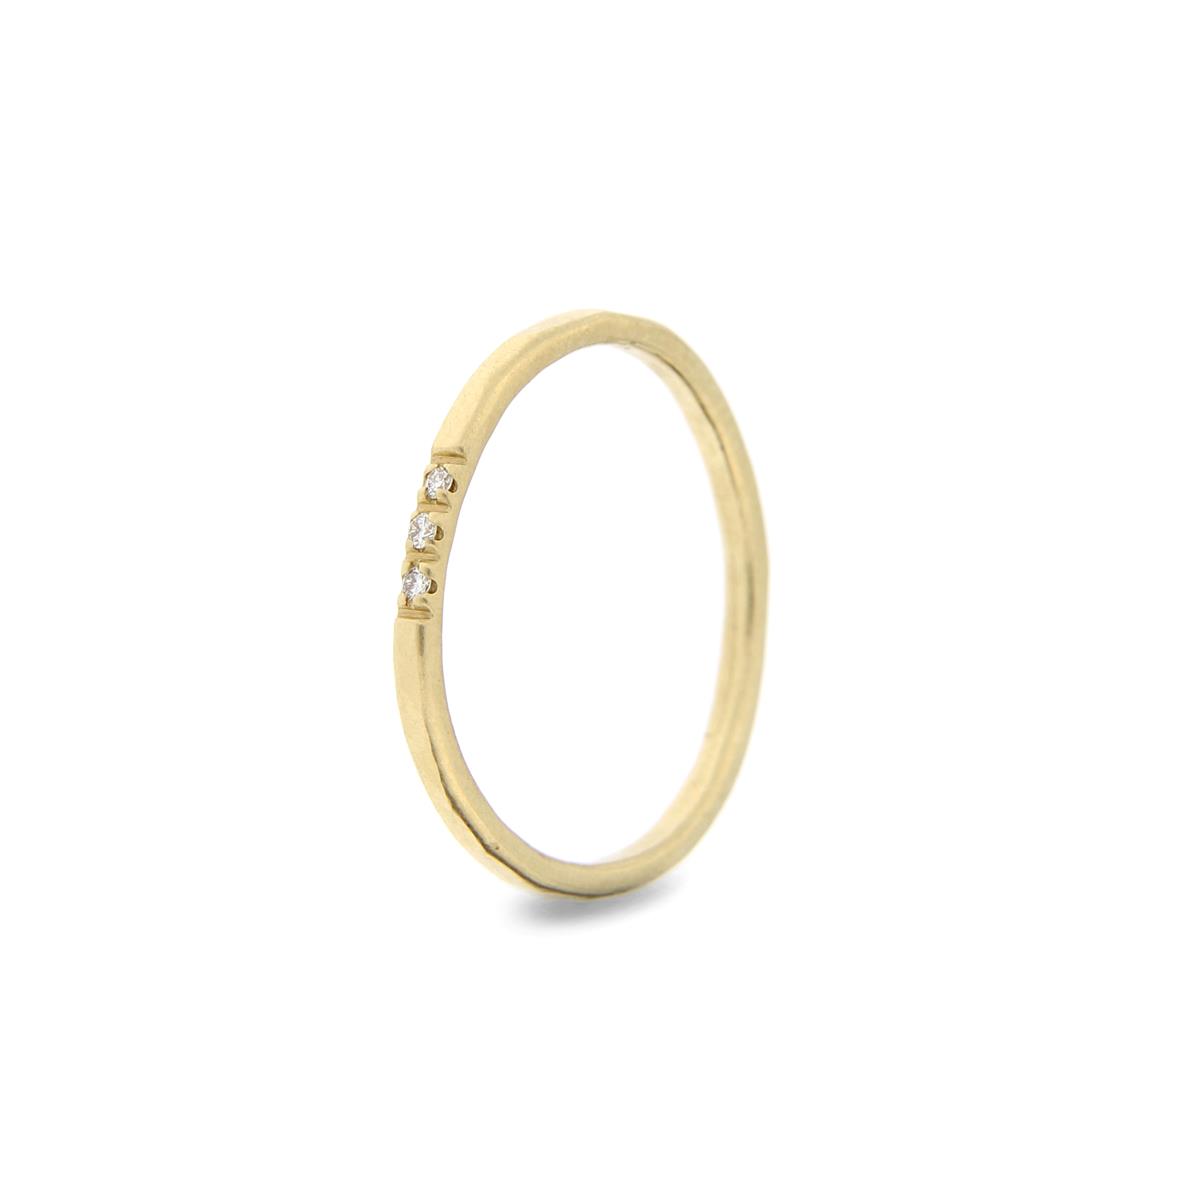 Katie g. Jewellery - aaa - Hammered Ring 1,5mm - Champagnergold 1 + 3 Diamonds